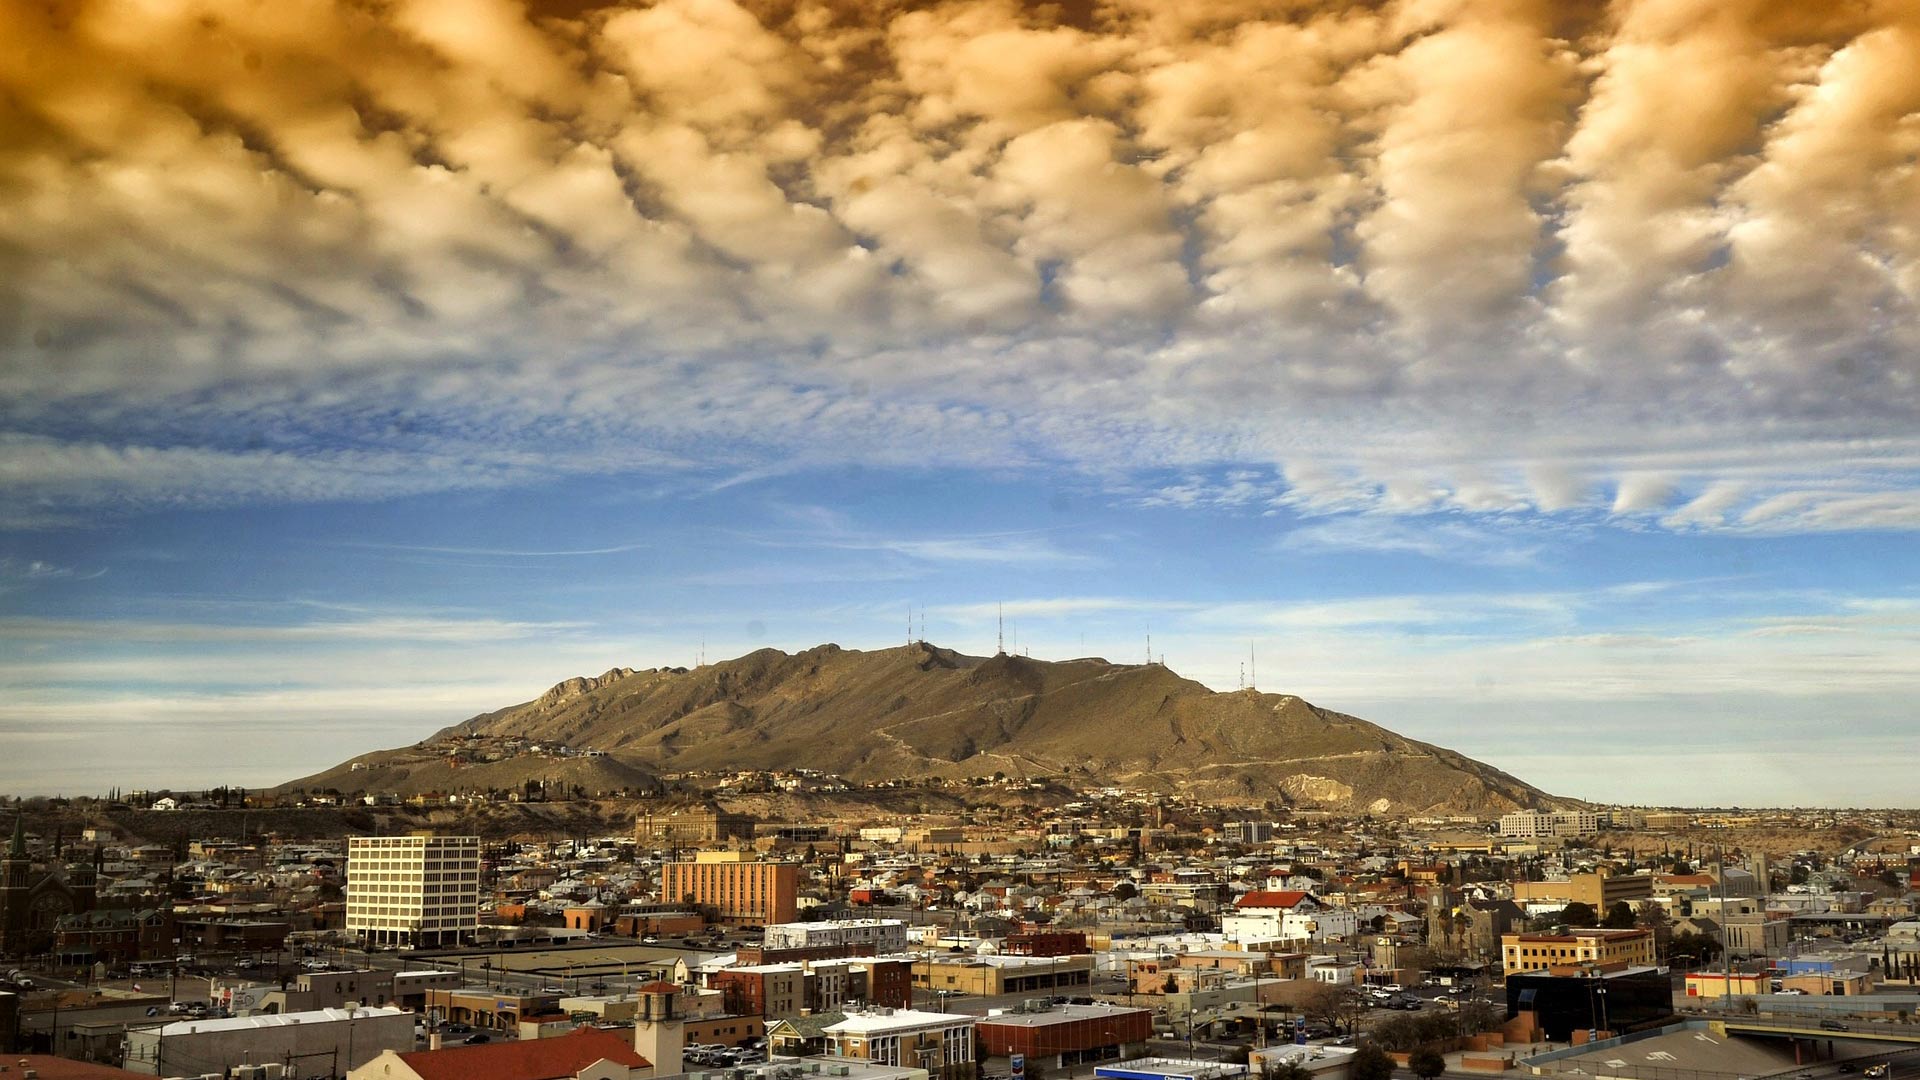 Skyline overview of El Paso, TX.